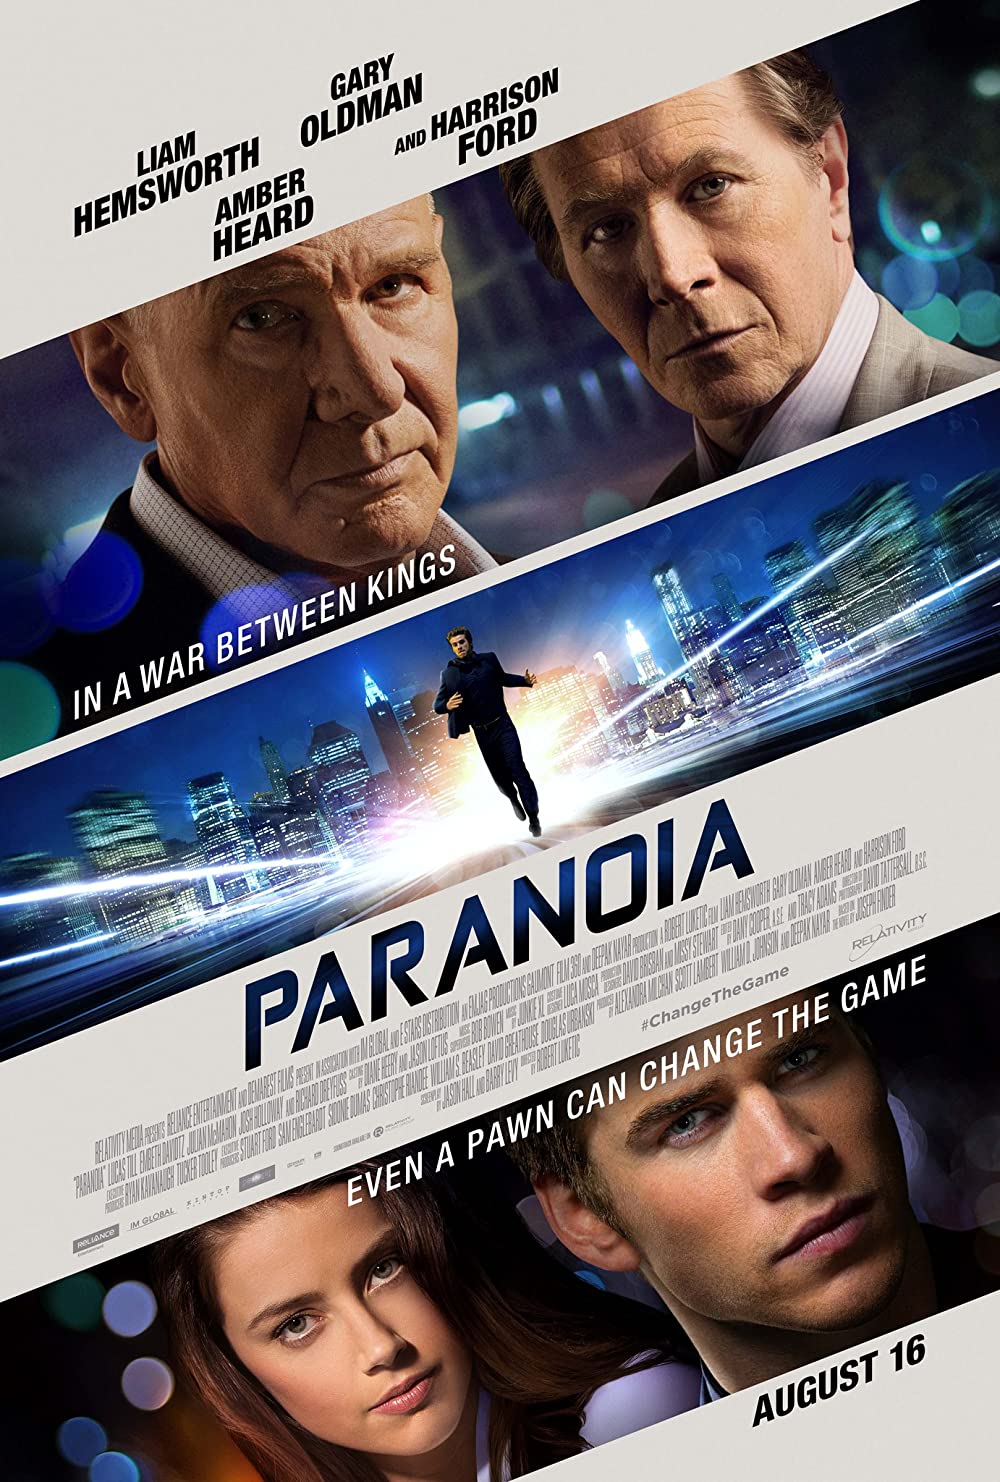 Filmbeschreibung zu Paranoia